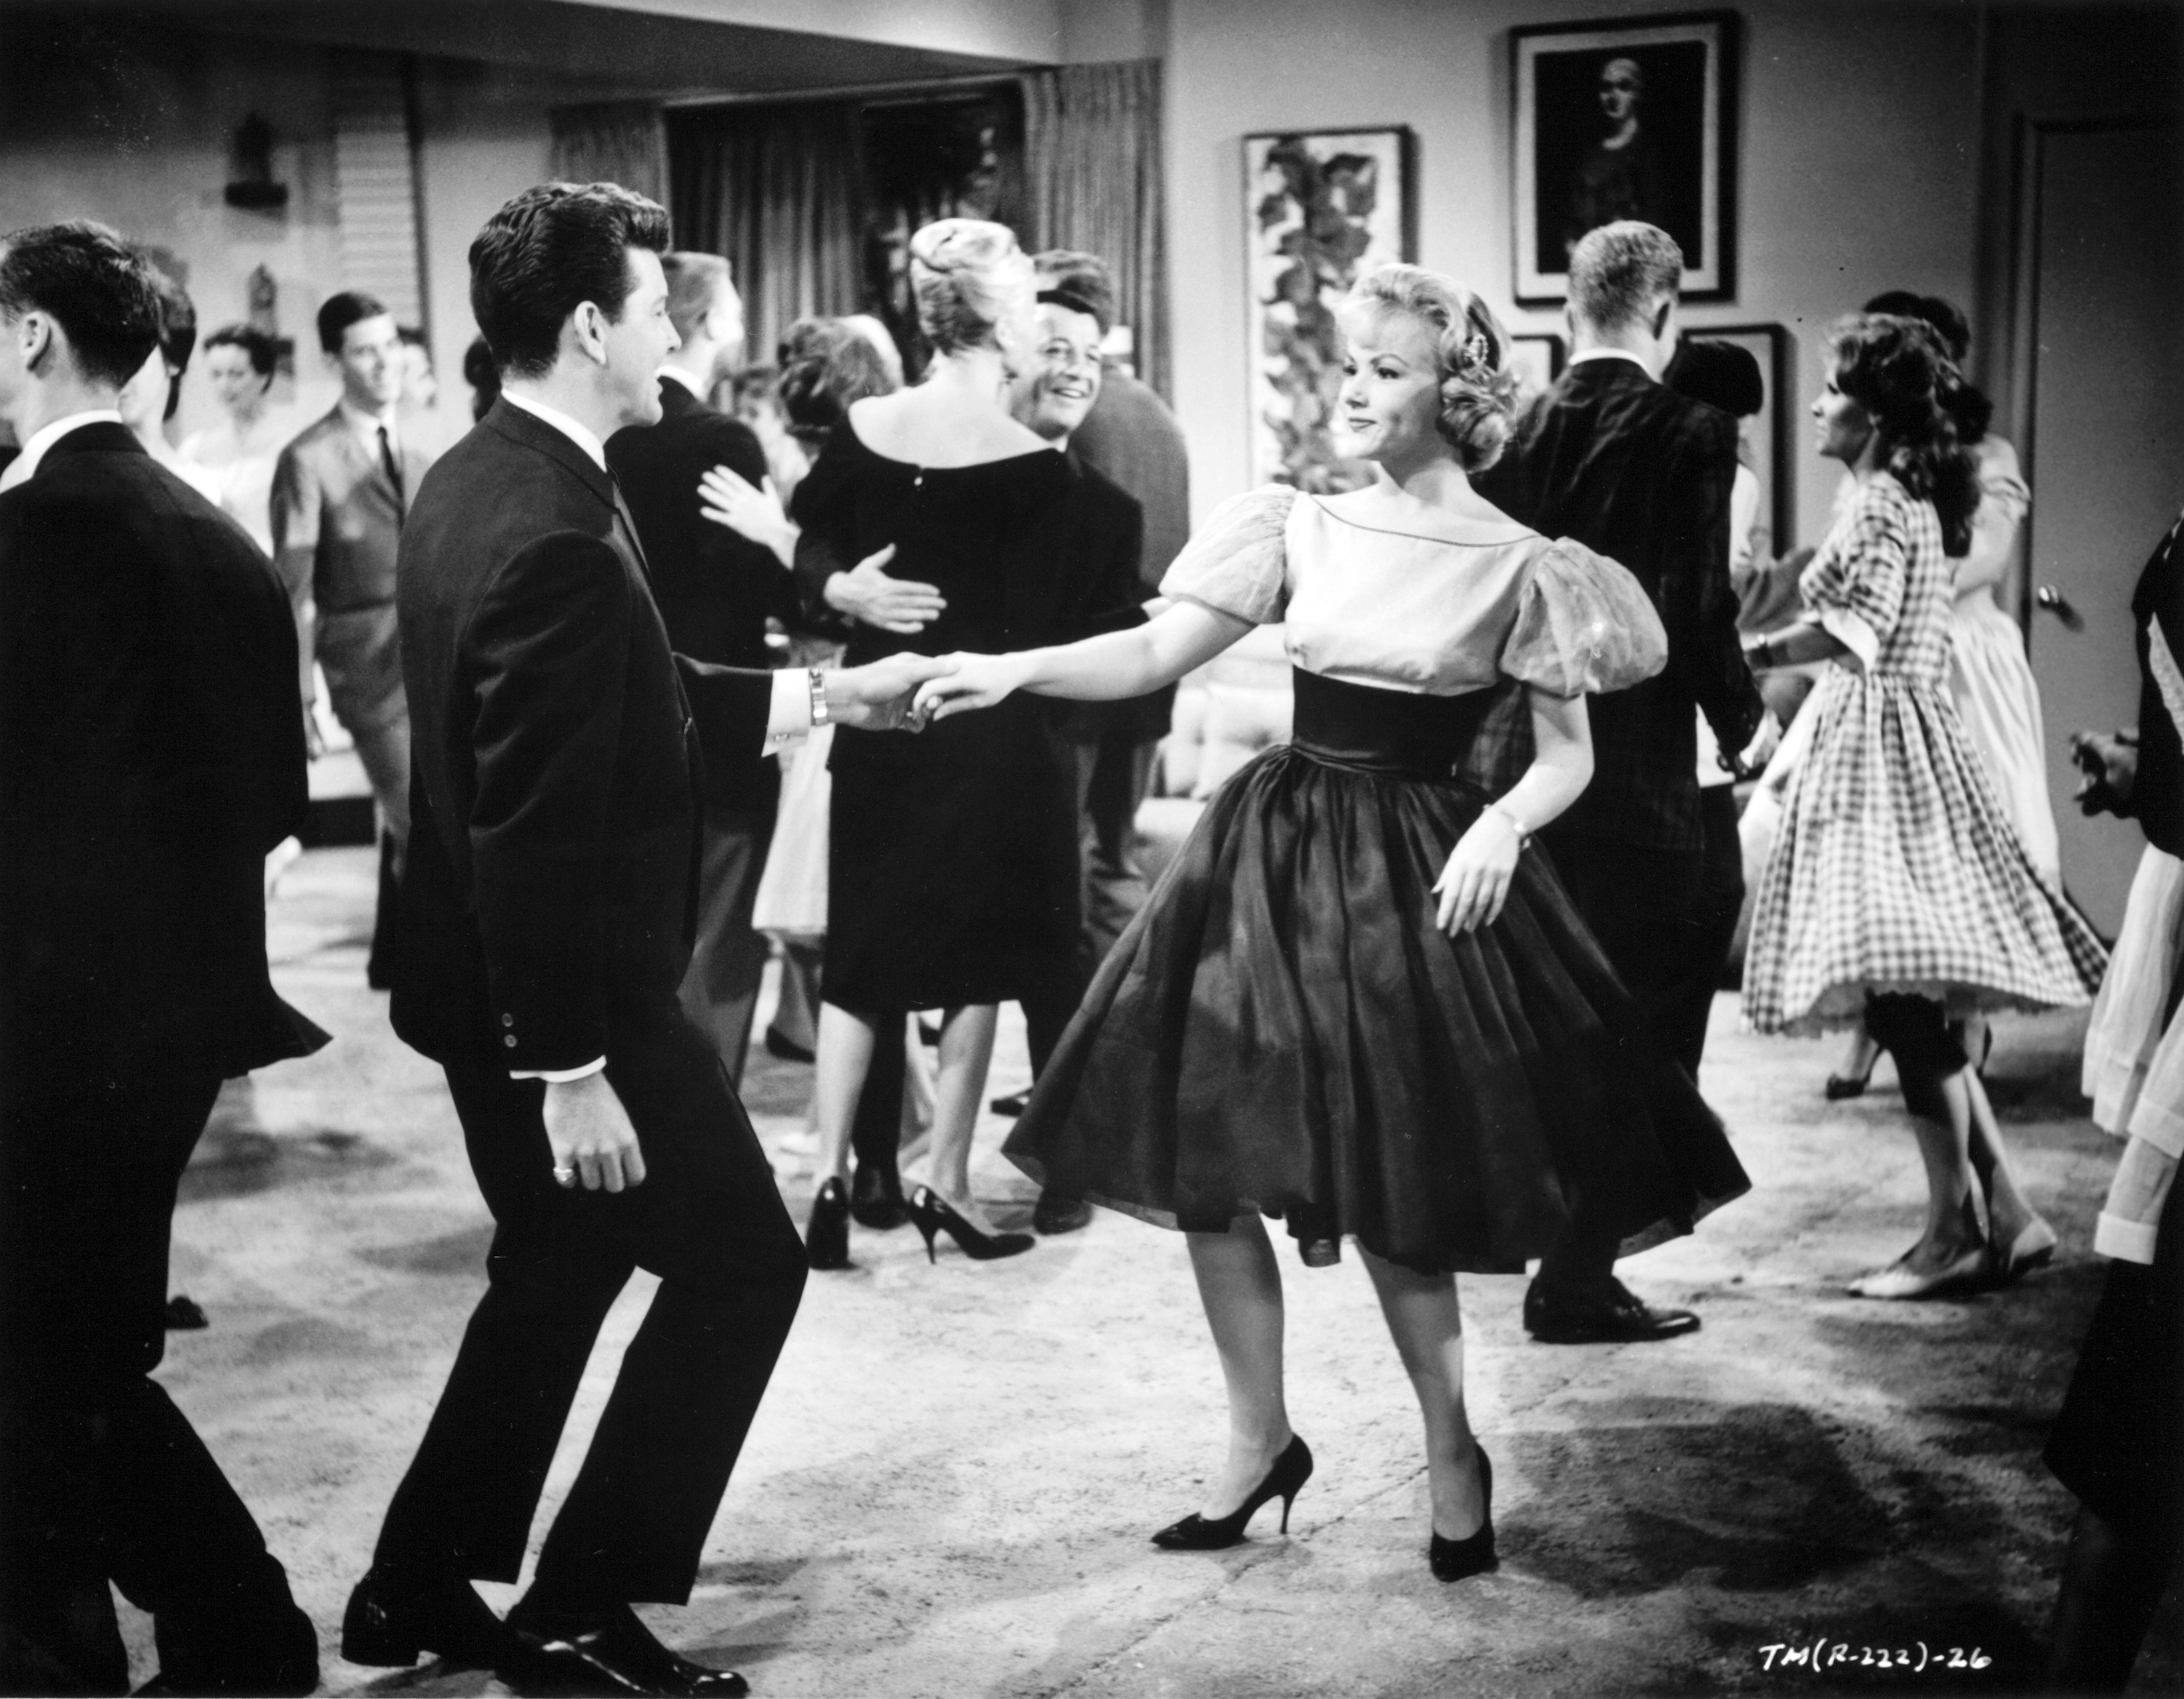 Hollywood Singing & Dancing: A Musical History - 1960's